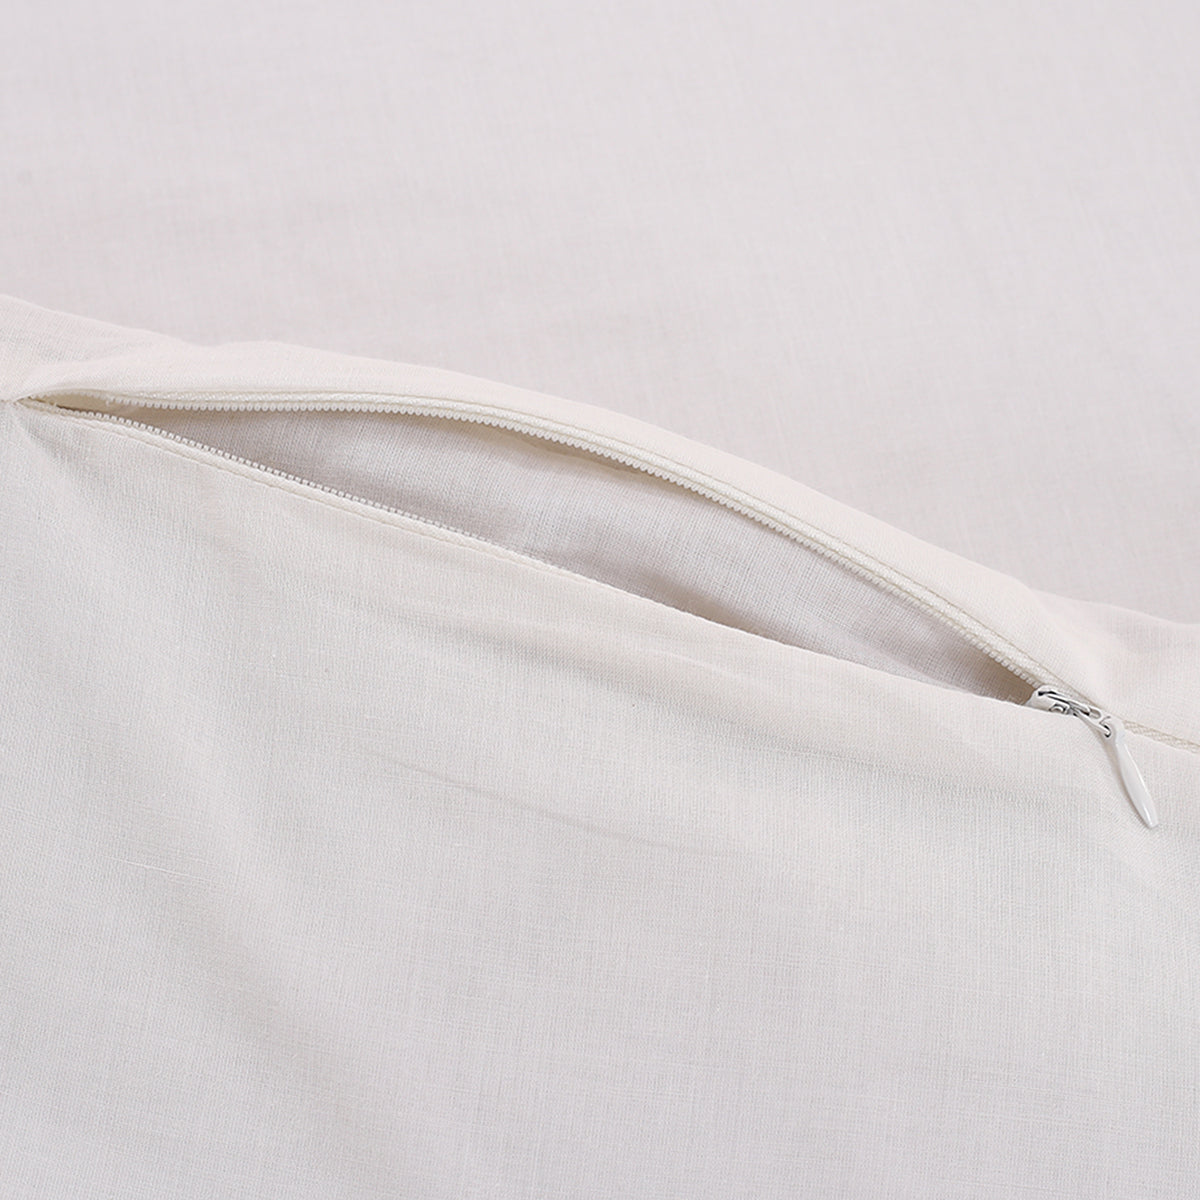 Benova 100% Cotton Ultra Soft & Smooth Voile Light Grey Duvet Cover Only